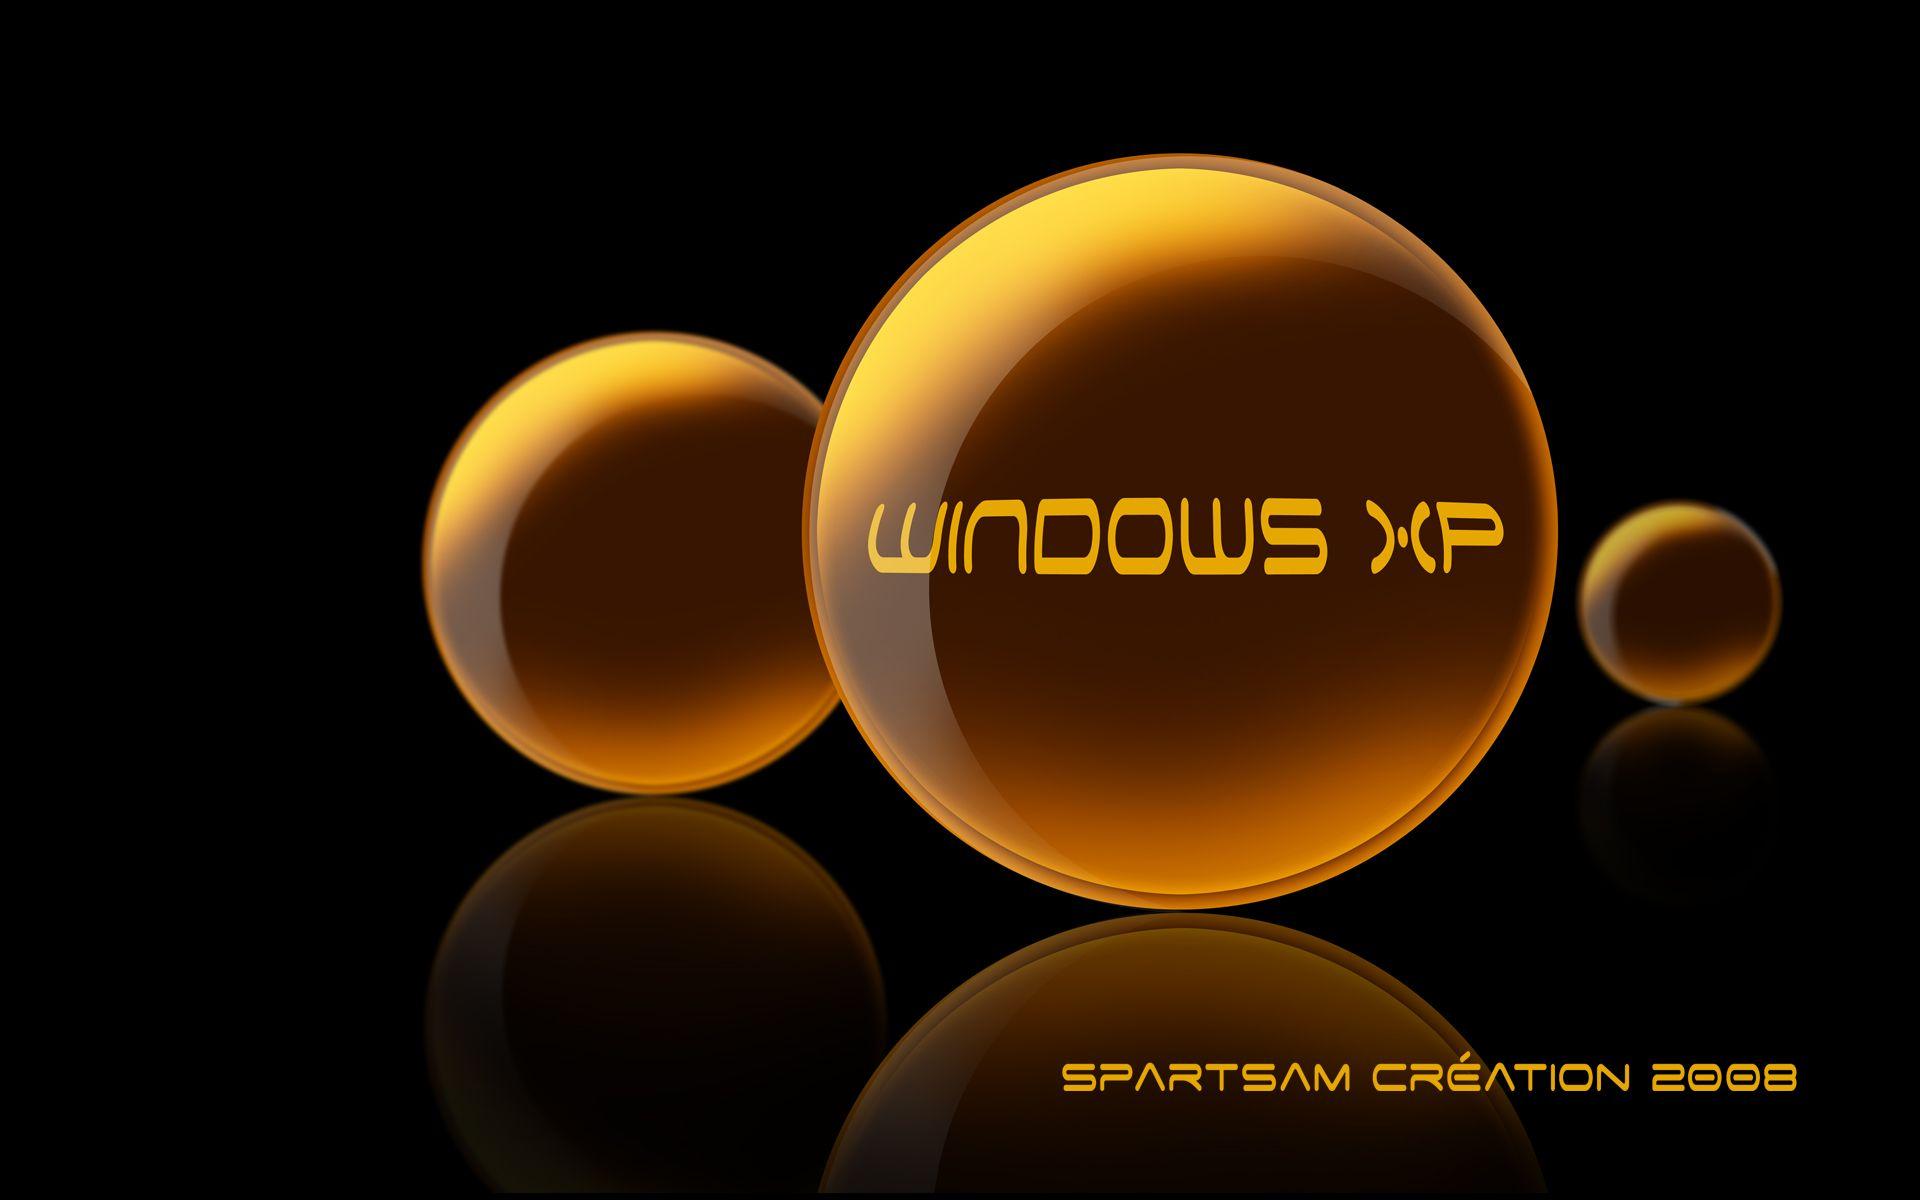 Window XP HD Image